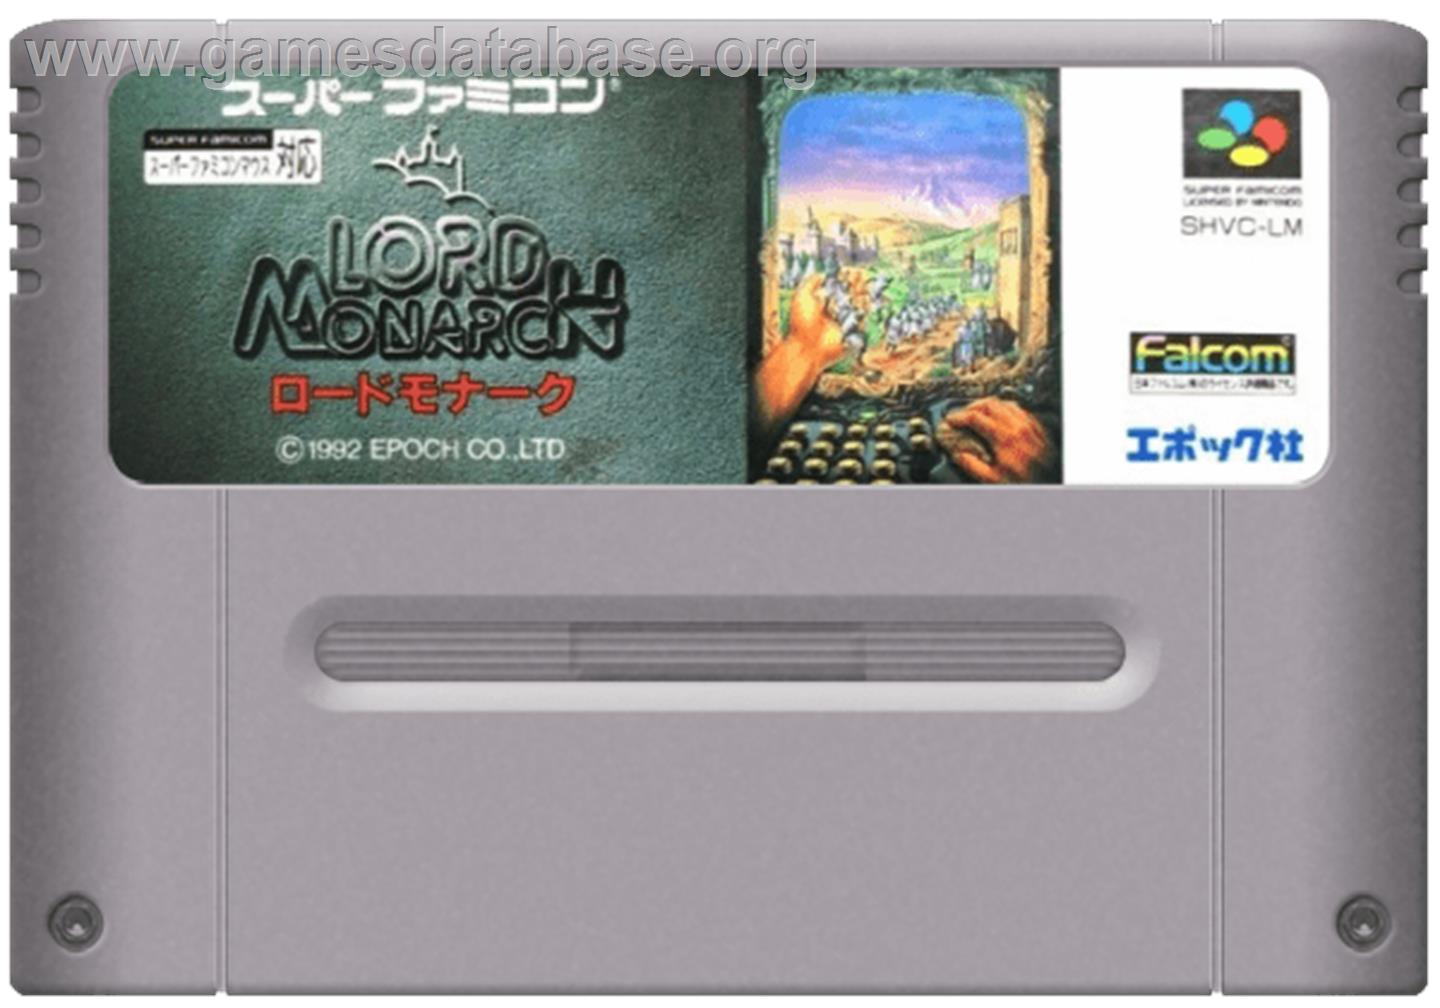 Lord Monarch - Nintendo SNES - Artwork - Cartridge